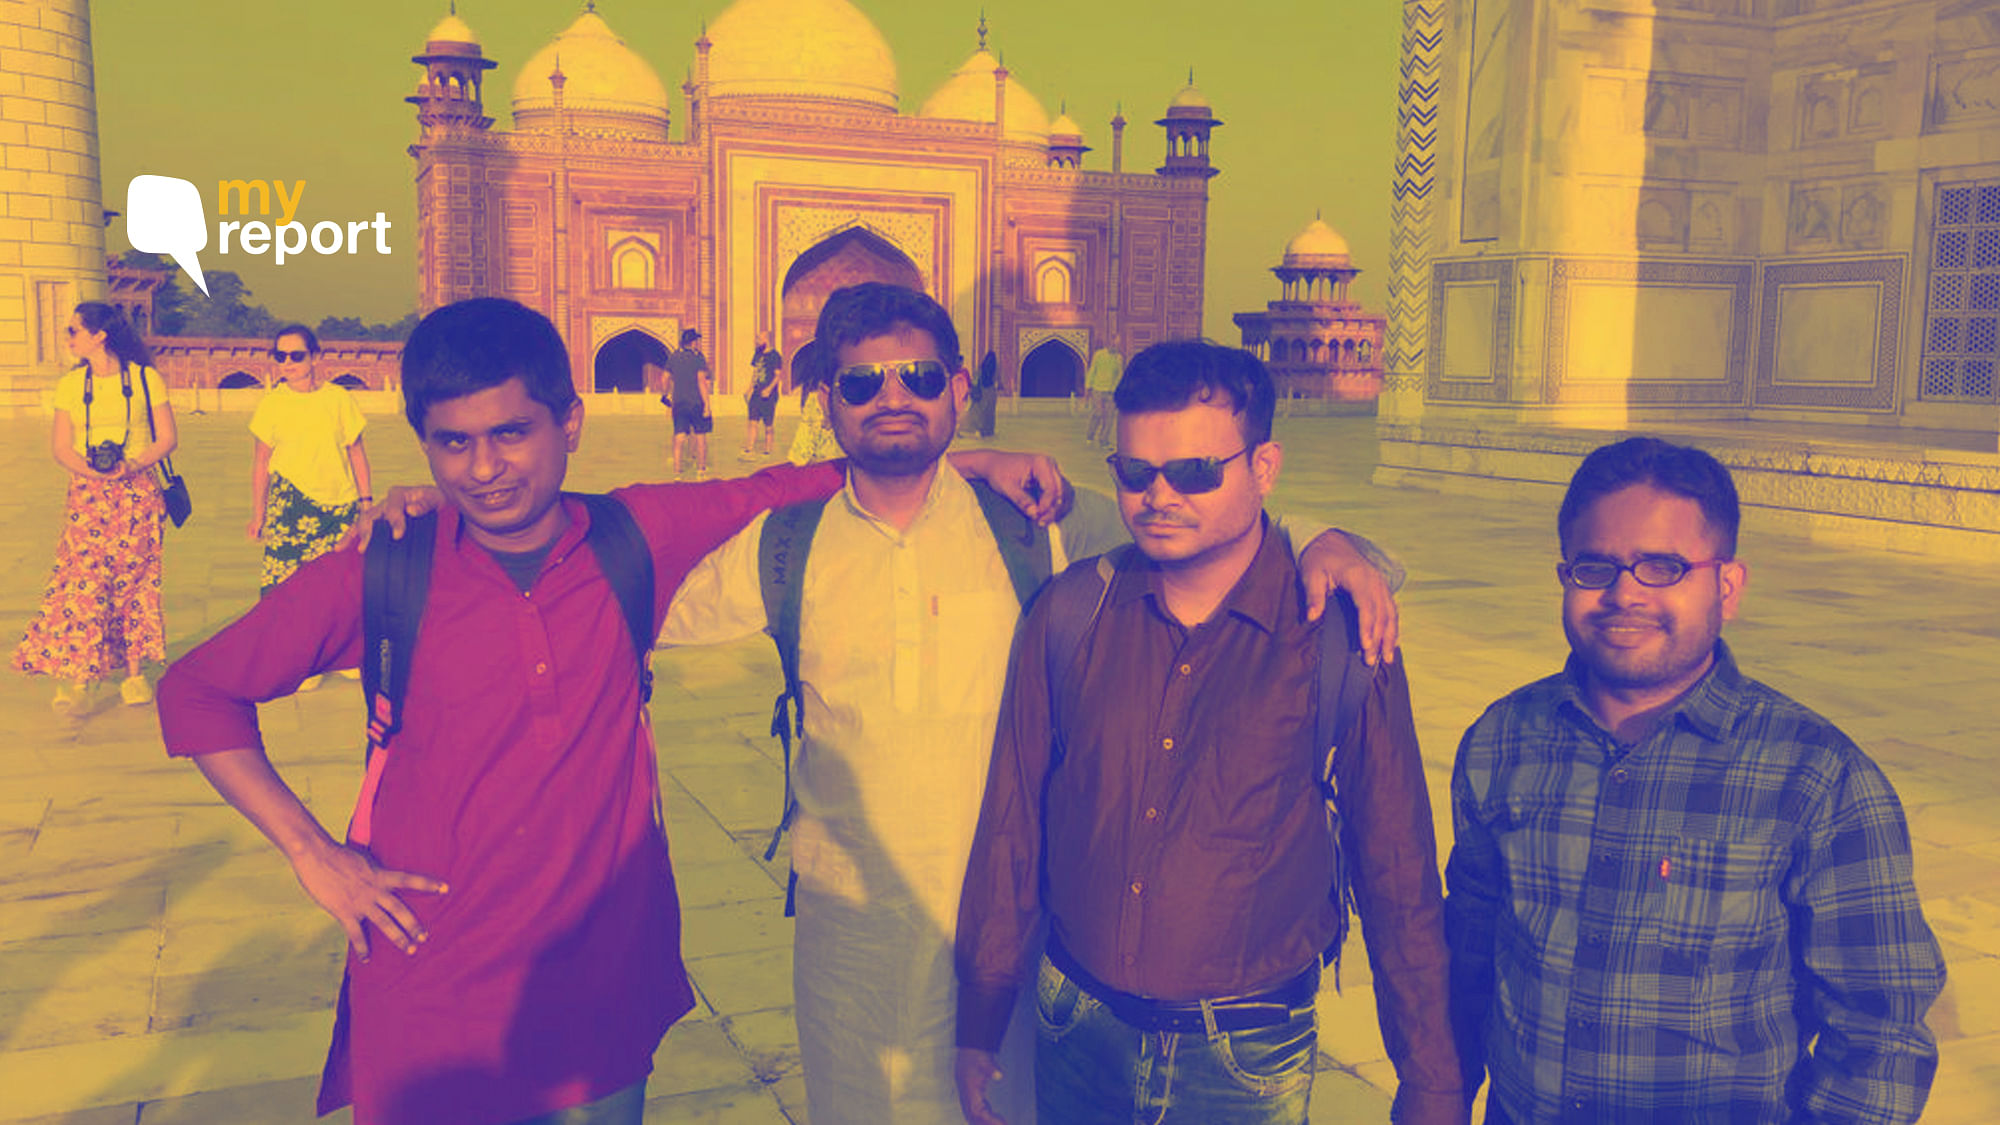 Prasanna Kumar Panda, Basanta Behera, Ananta Kumar Nayak, and Amit Kumar Mohanty pose in front of the Taj Mahal Museum.&nbsp;